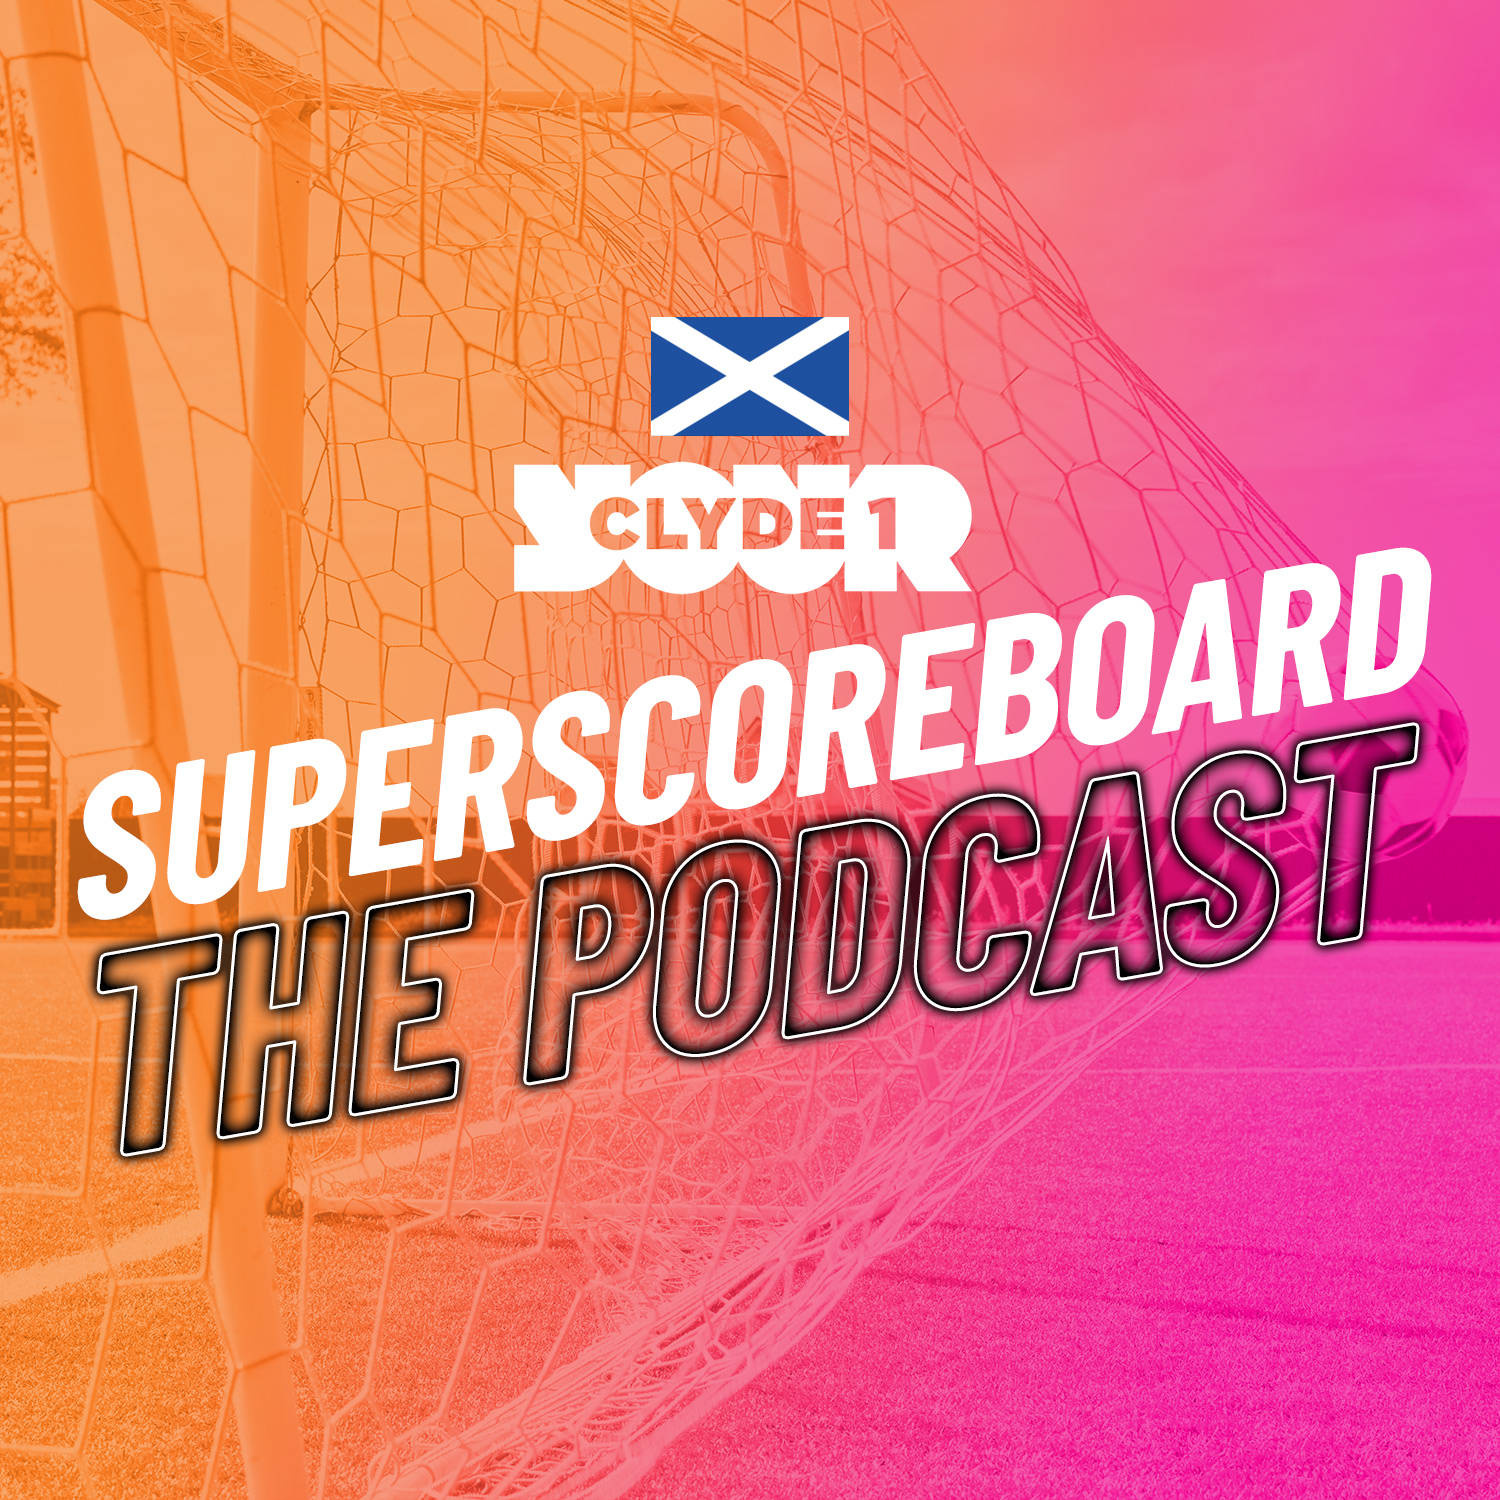 Monday 18th December Clyde 1 Superscoreboard